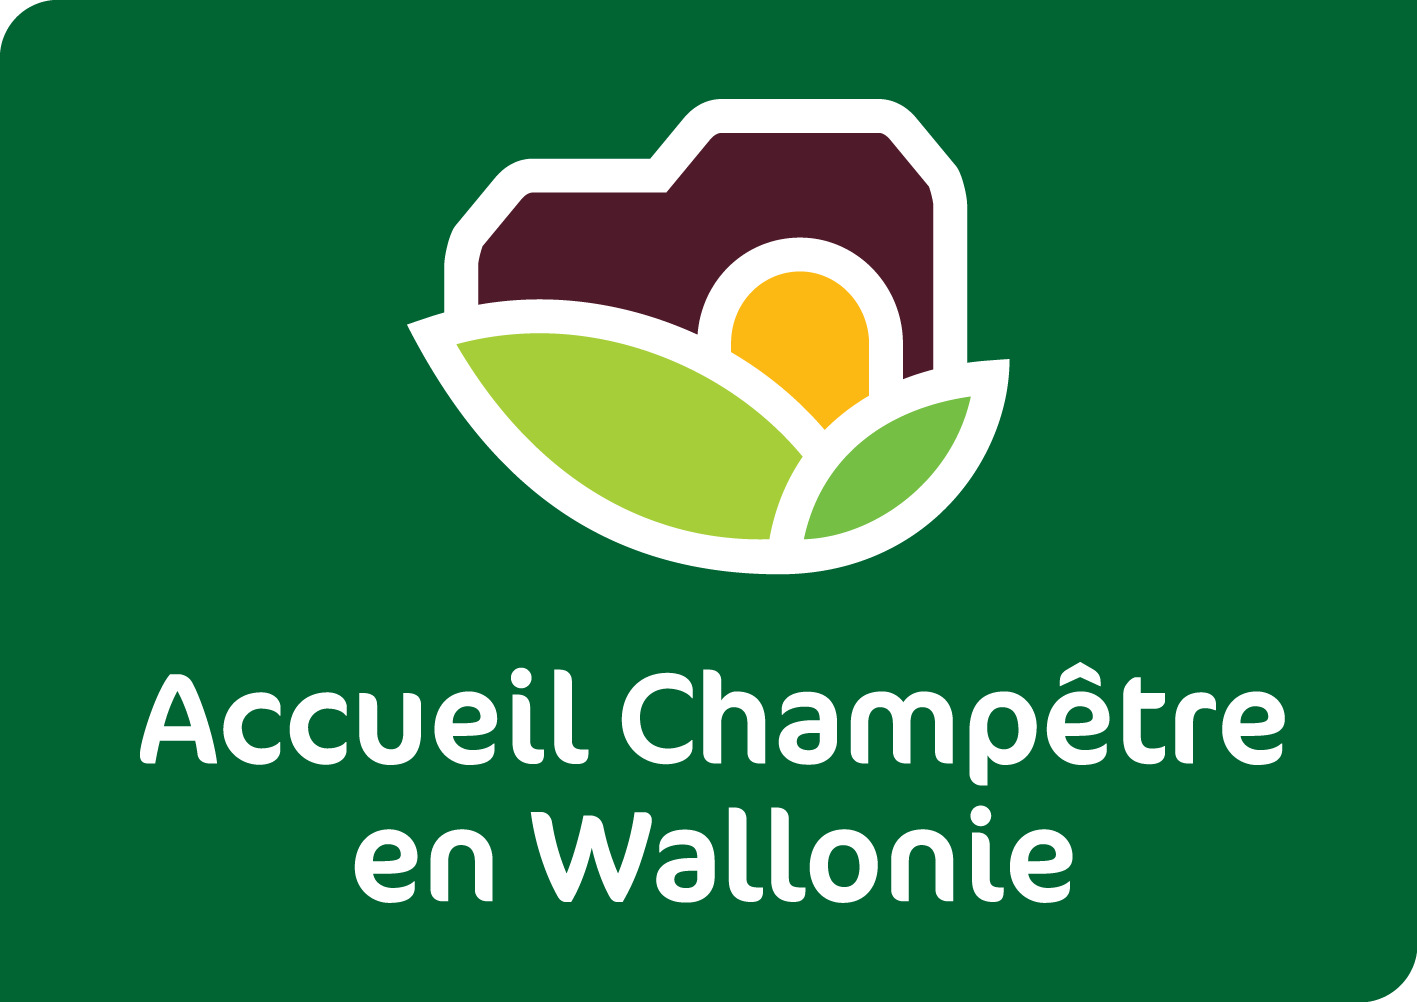 Accueil Champetre logo